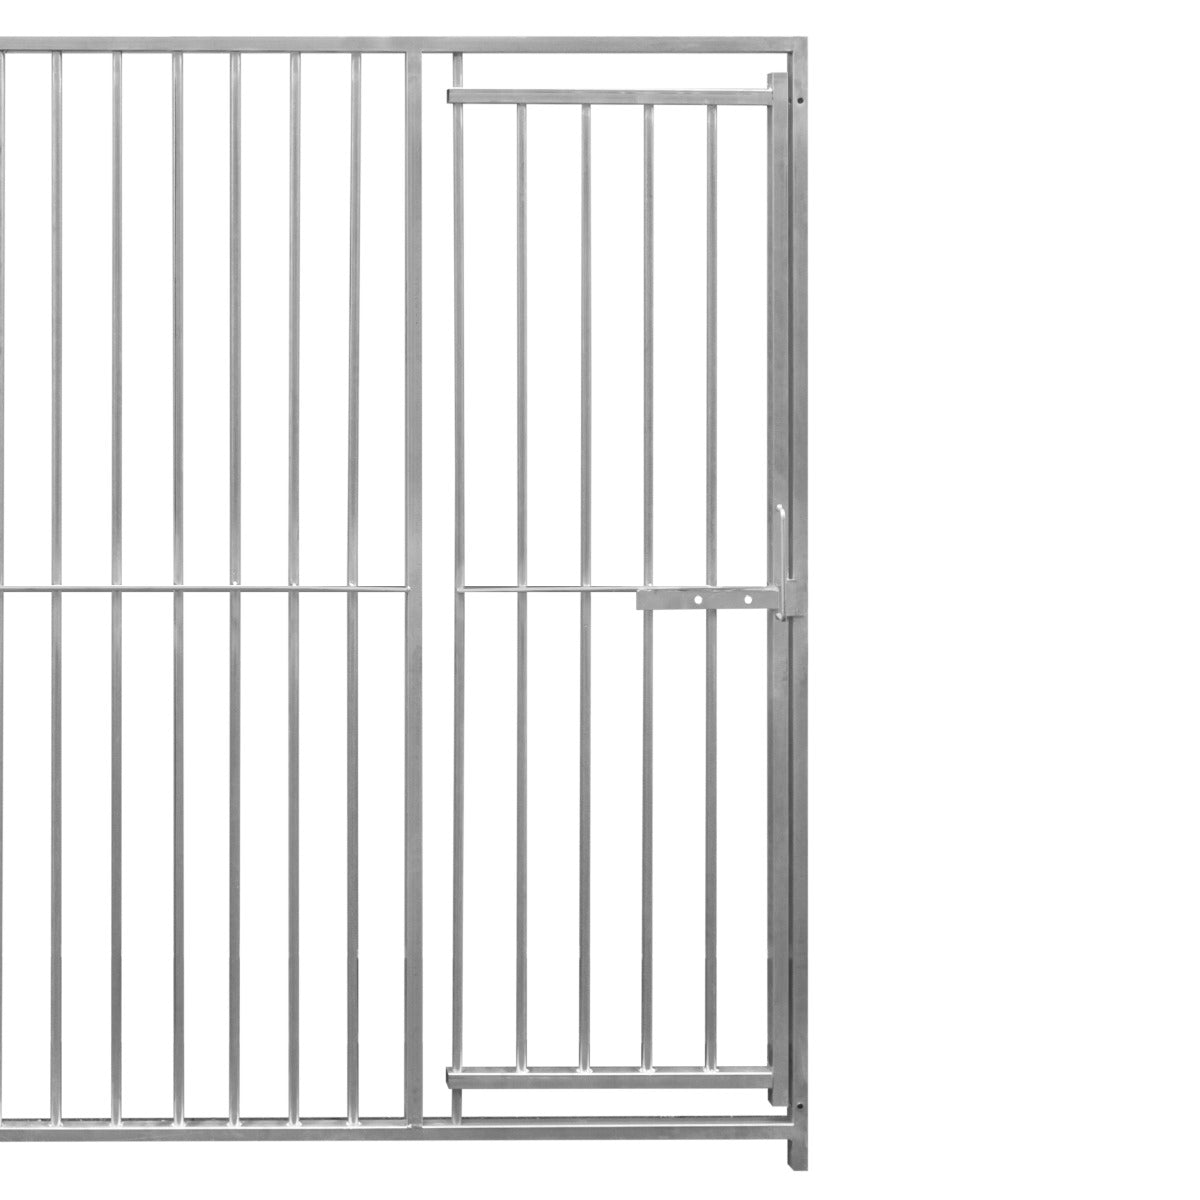 1m Dog Run Panel With Door – 8cm Bar Spacing